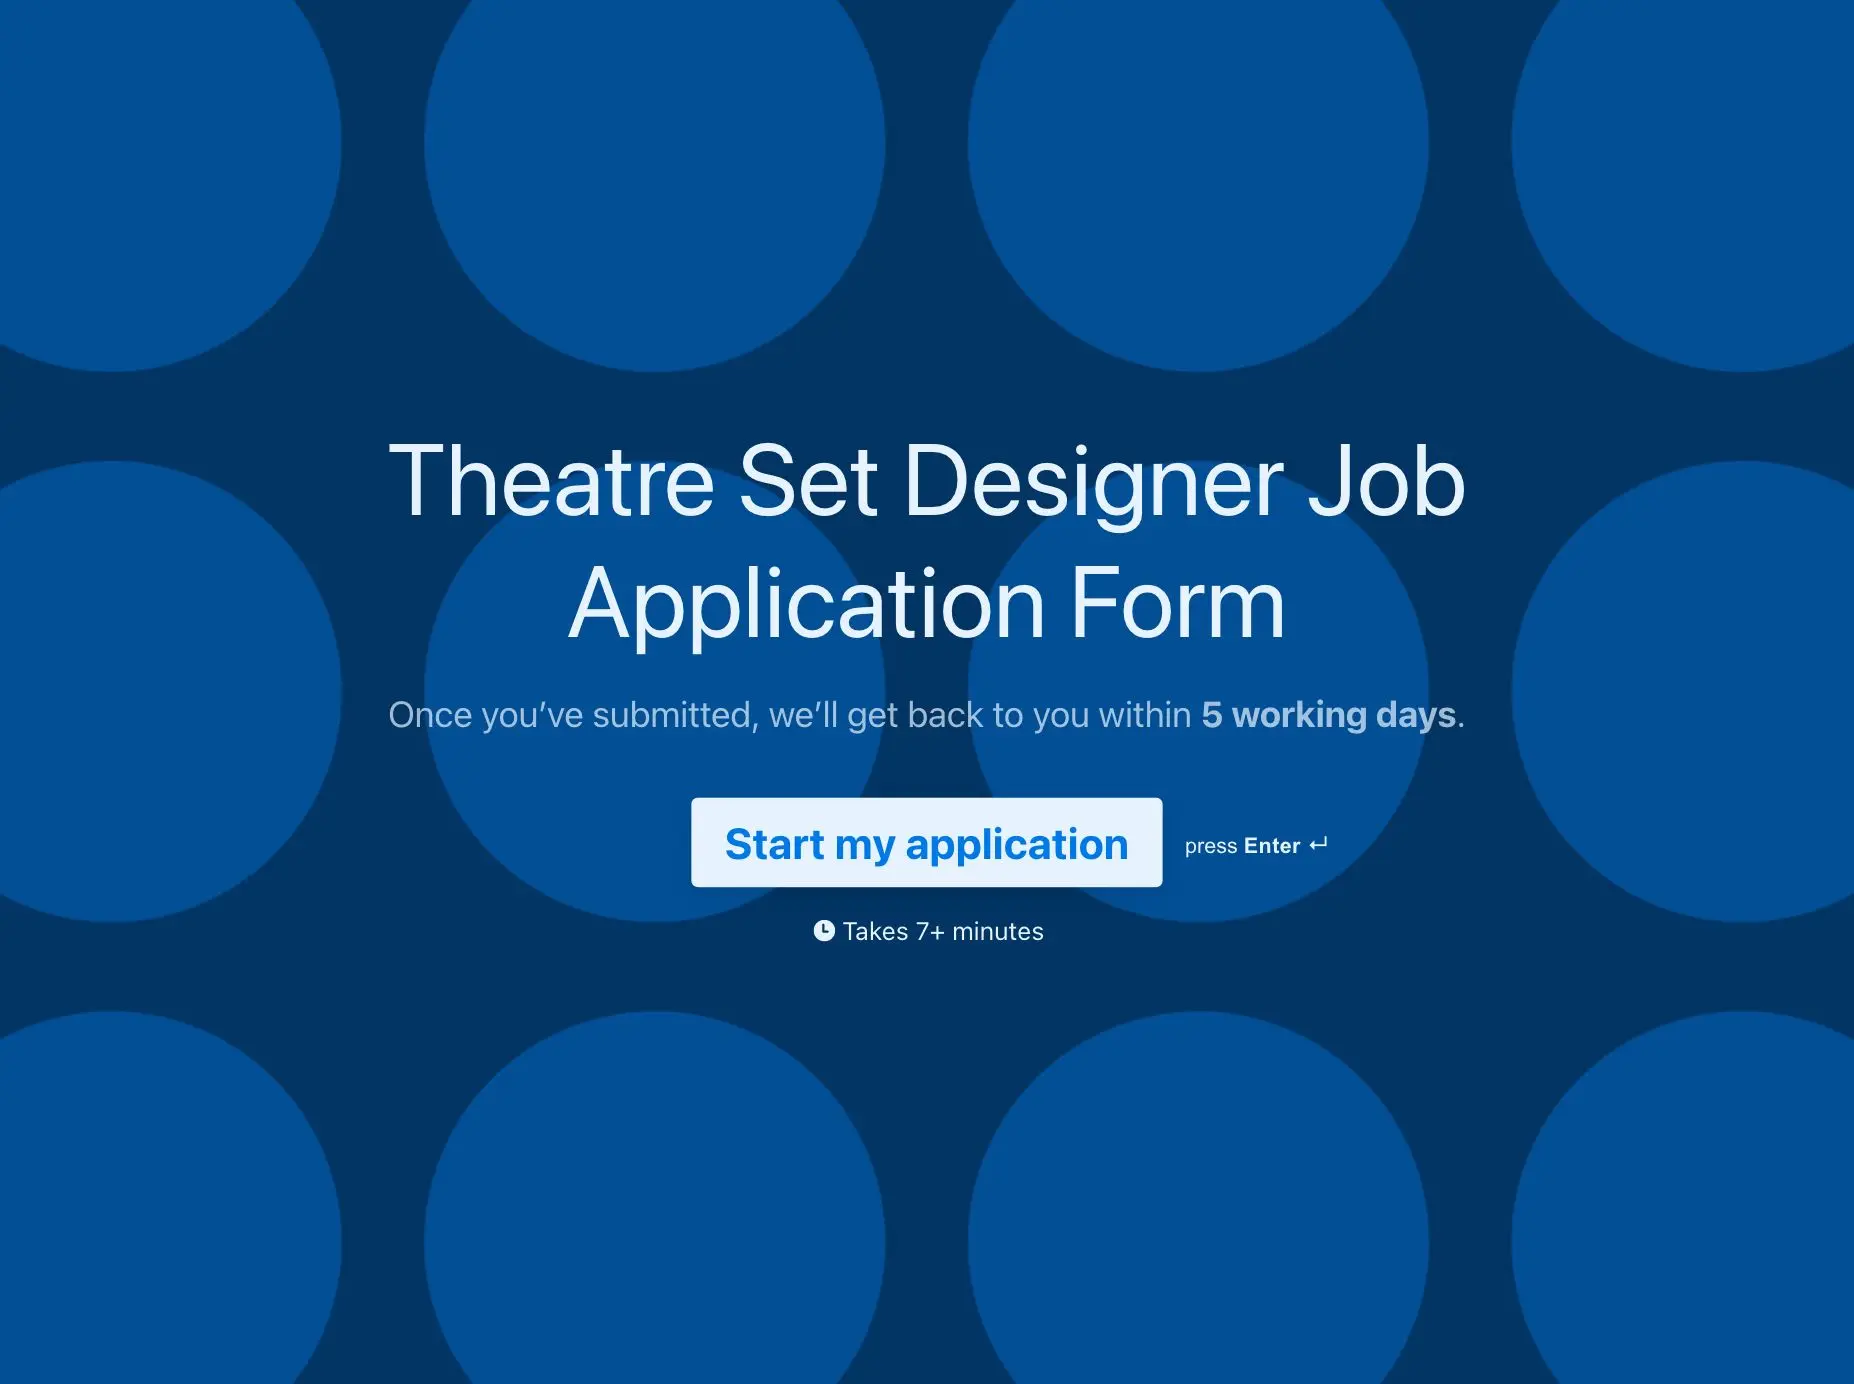 Theatre Set Designer Job Application Form Template Hero